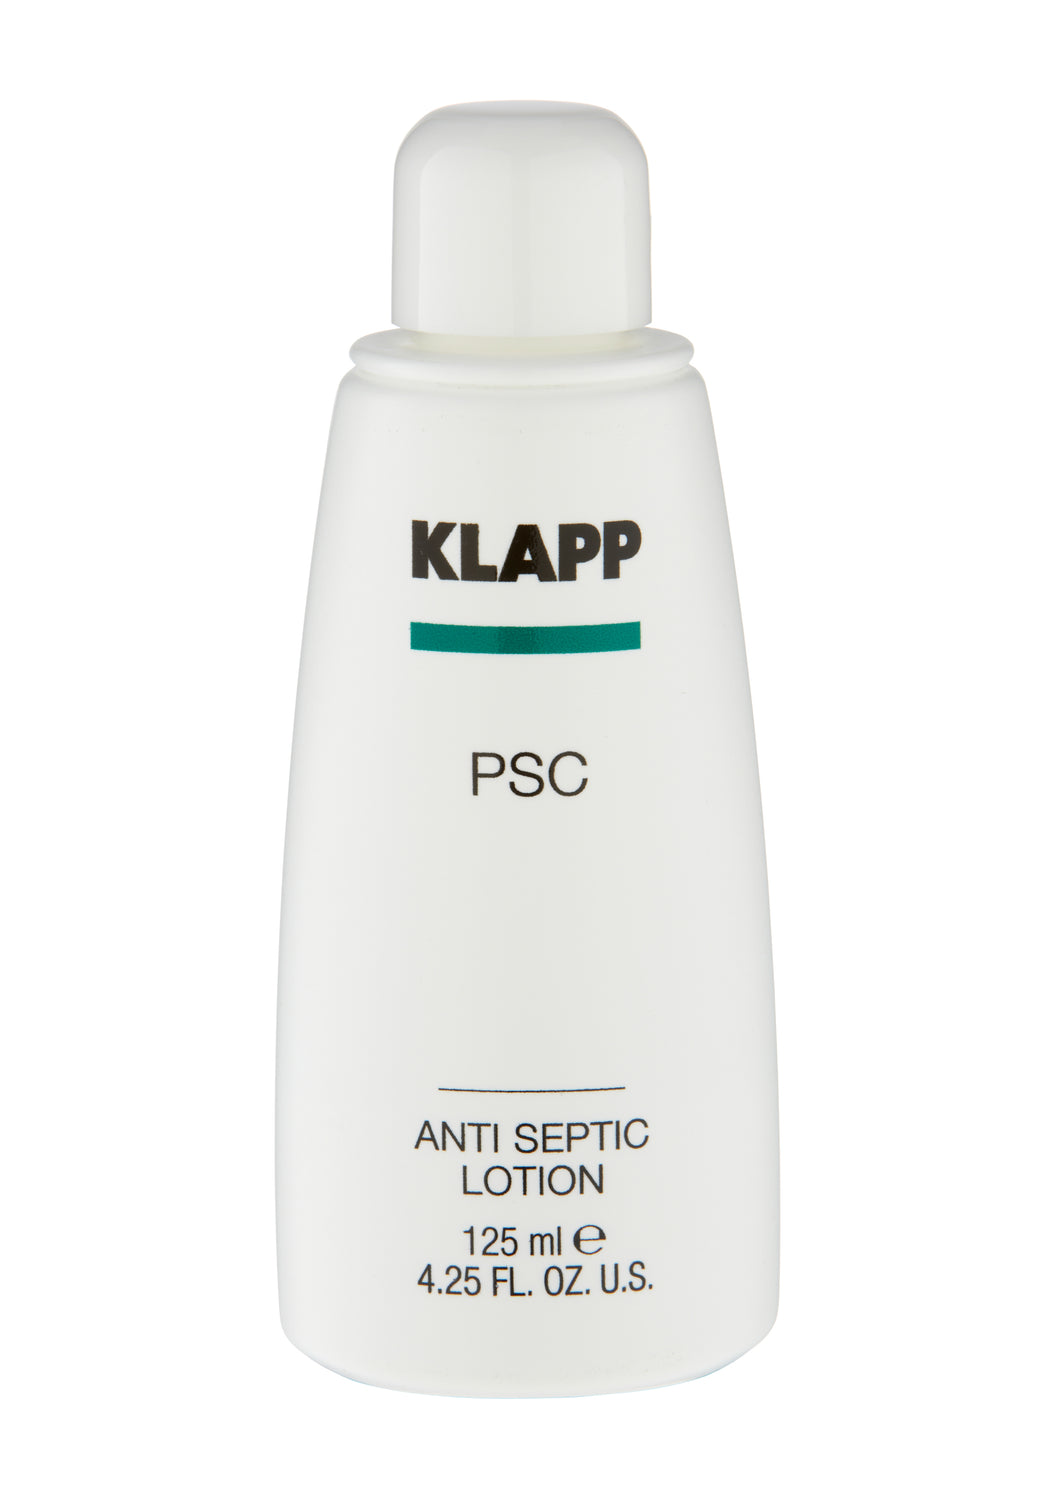 KLAPP PSC Anti Septic Lotion 125 ml